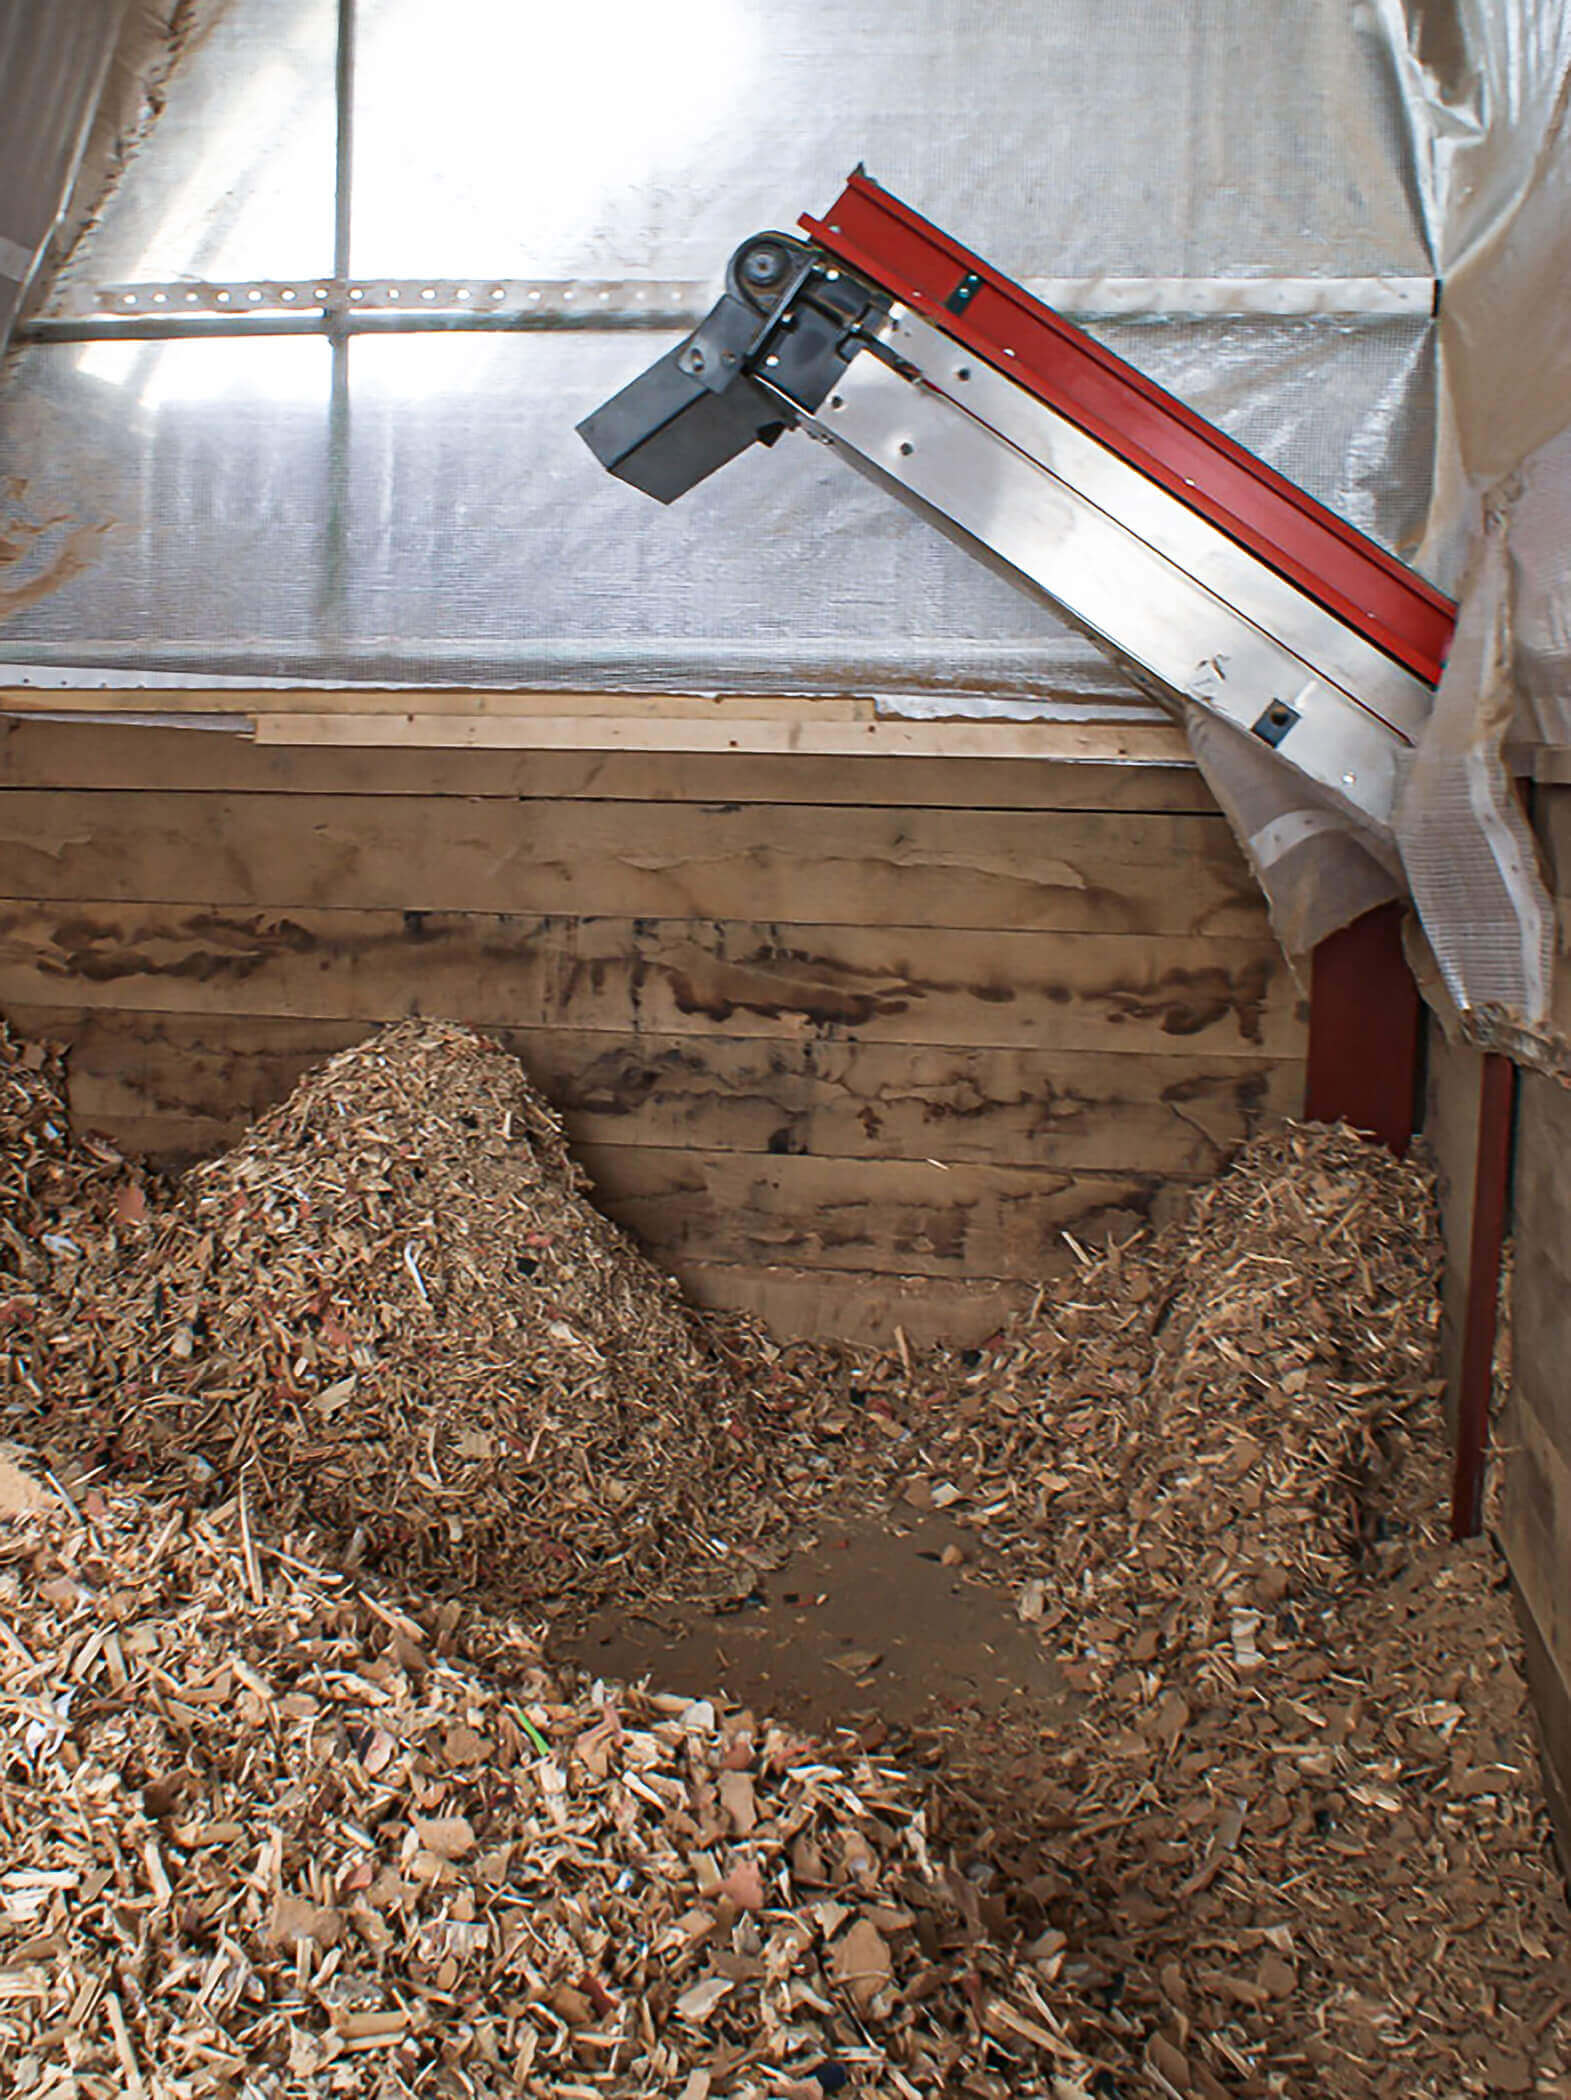 The shredded wood is transported into the bunker via conveyor belt